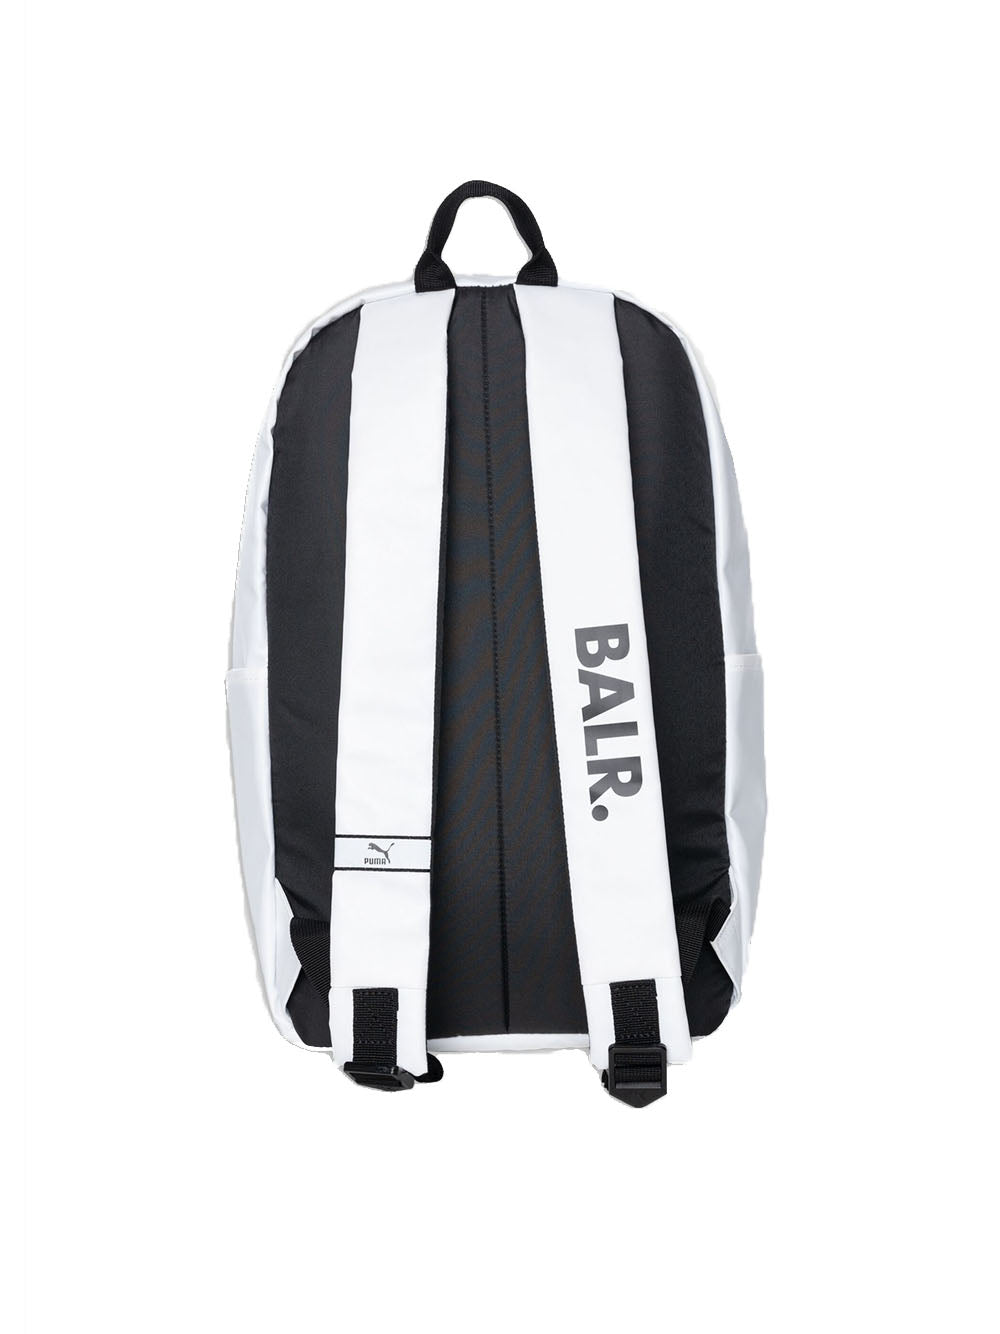 PUMA X BALR. Logo Backpack White - MAISONDEFASHION.COM